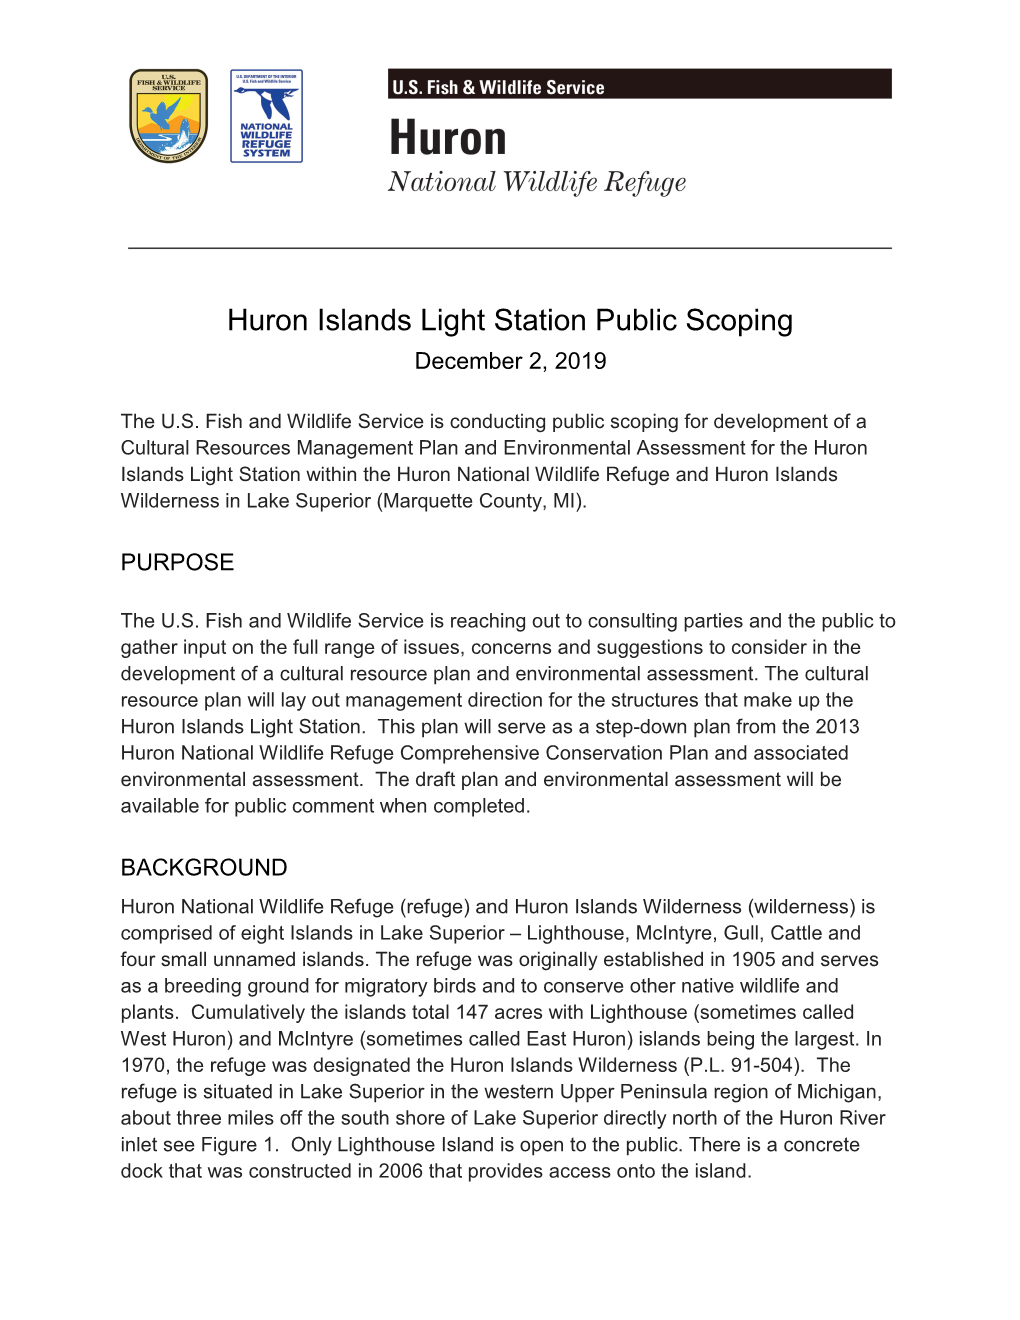 Huron Islands Light Station Public Scoping 12/02/19